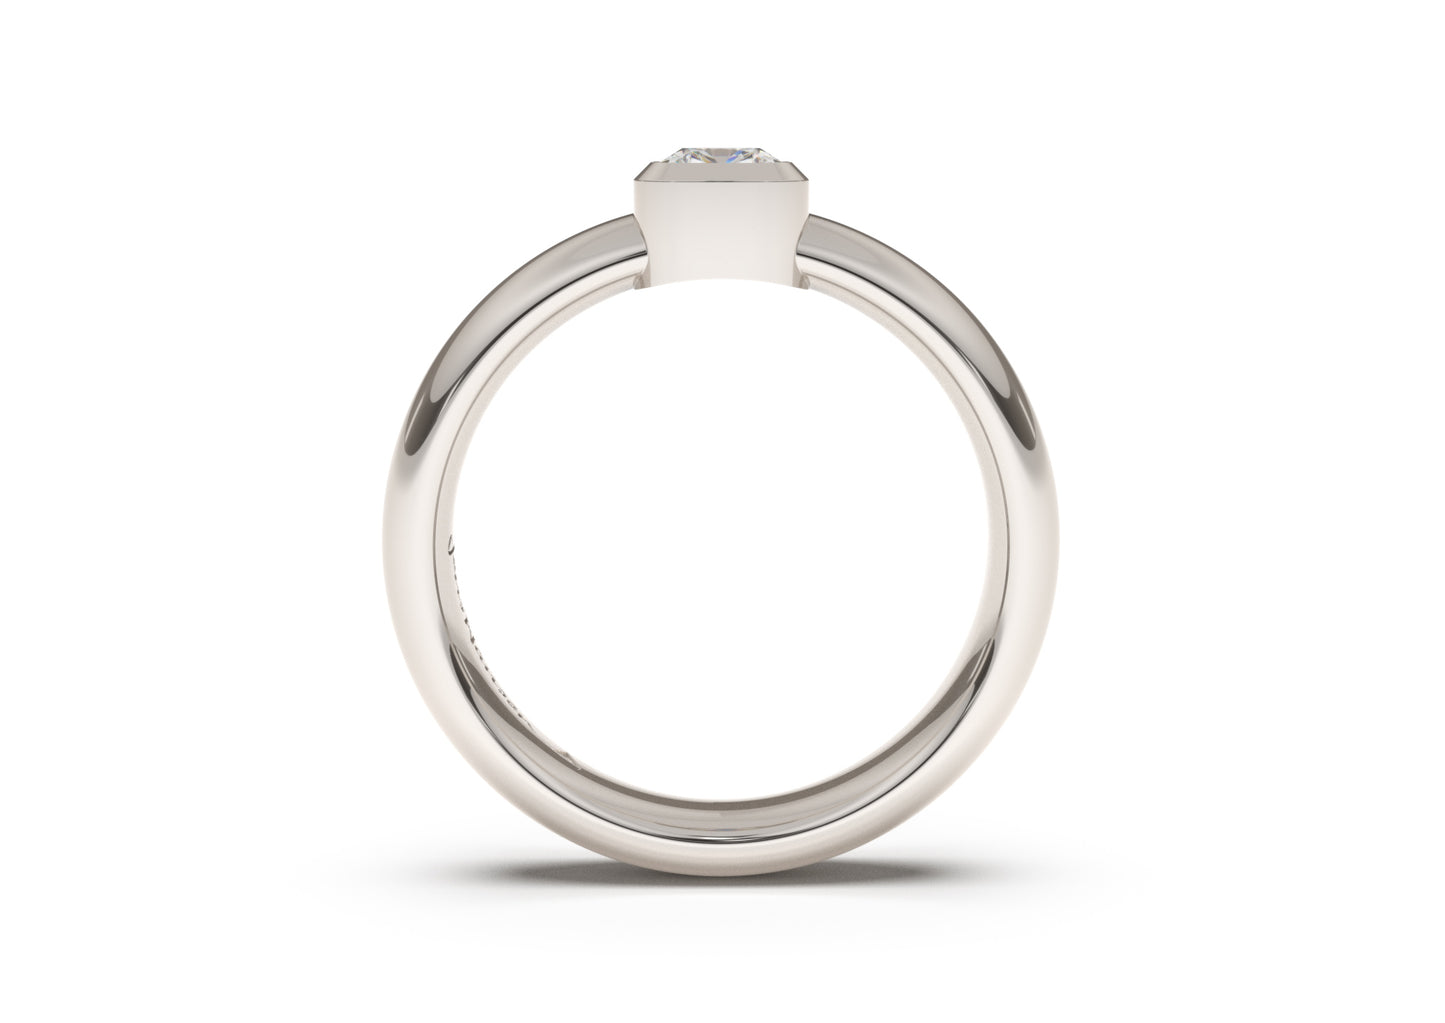 Cushion Modern Engagement Ring, White Gold & Platinum